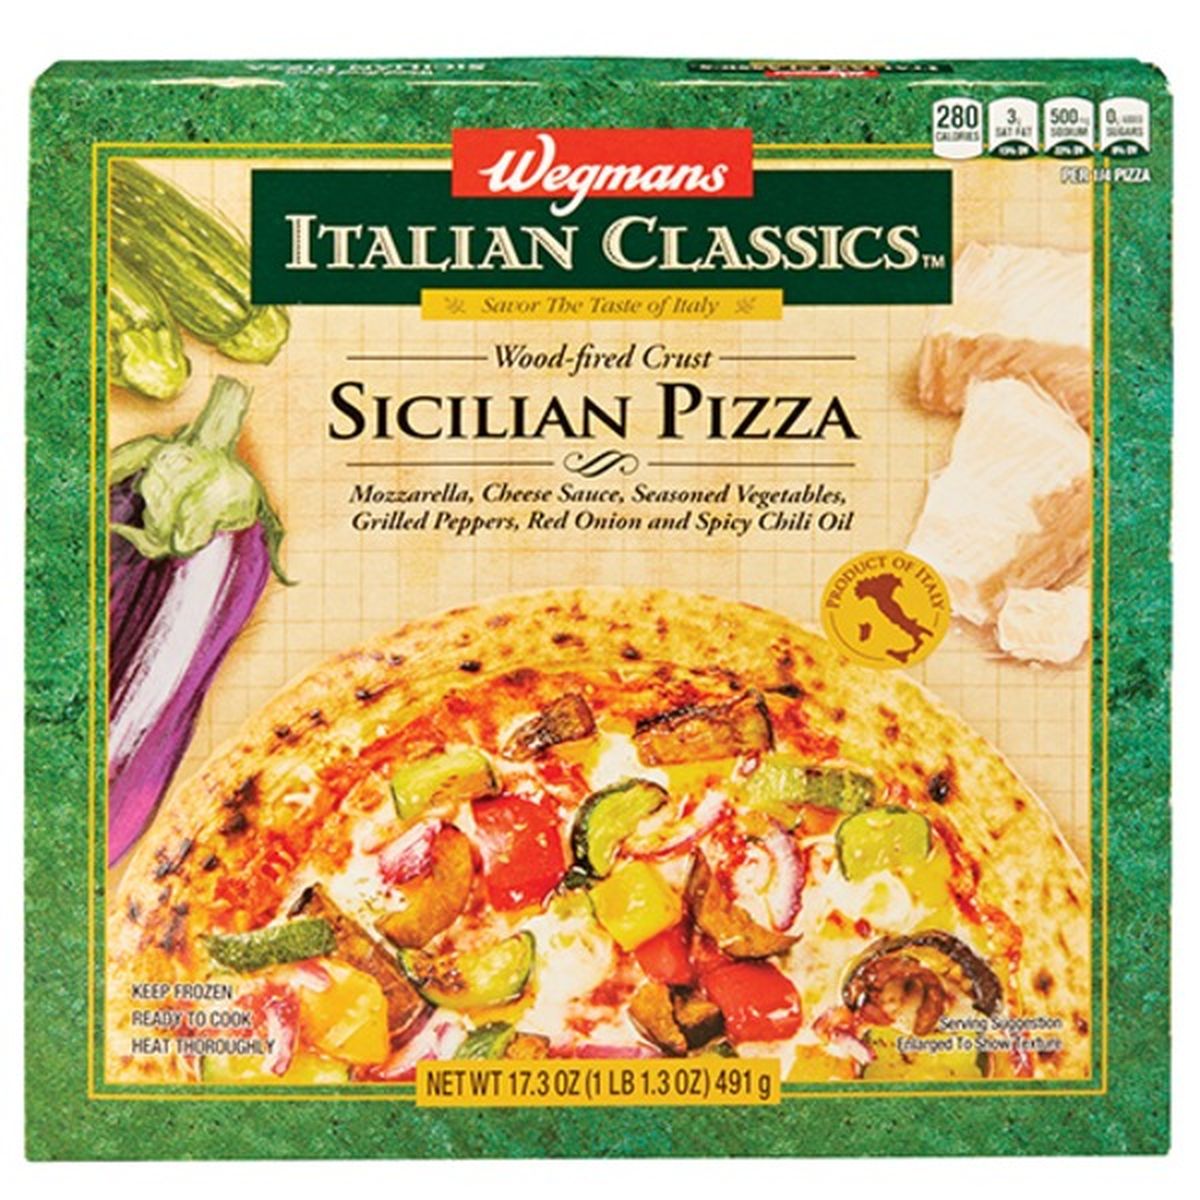 Calories in Wegmans Italian Classics Sicilian Pizza, Wood-Fired Crust